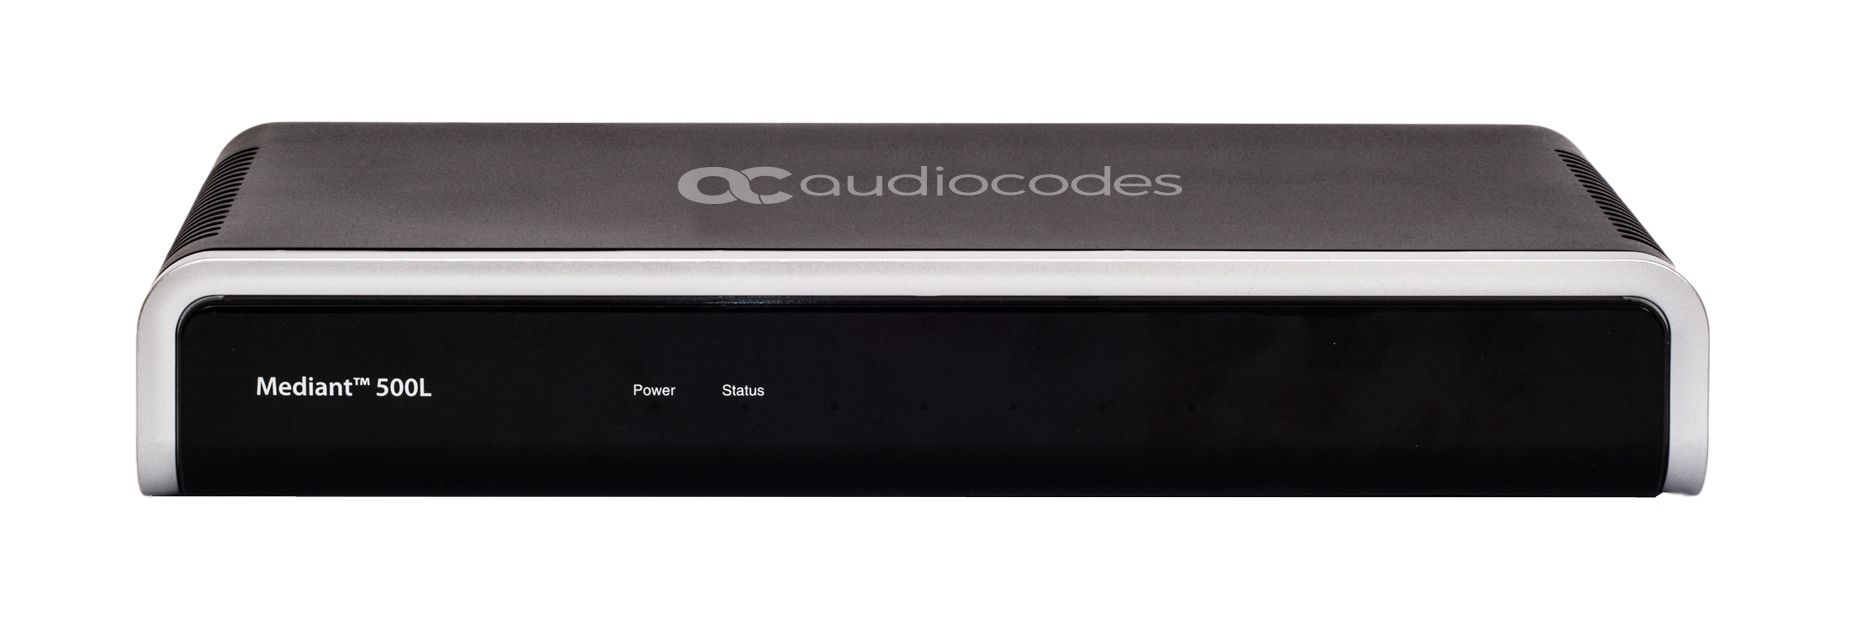 AudioCodes Mediant 500L Hybrid Enterprise Session Border Controller and Gateway with 4 FXS interfaces M500L-V-4S photo